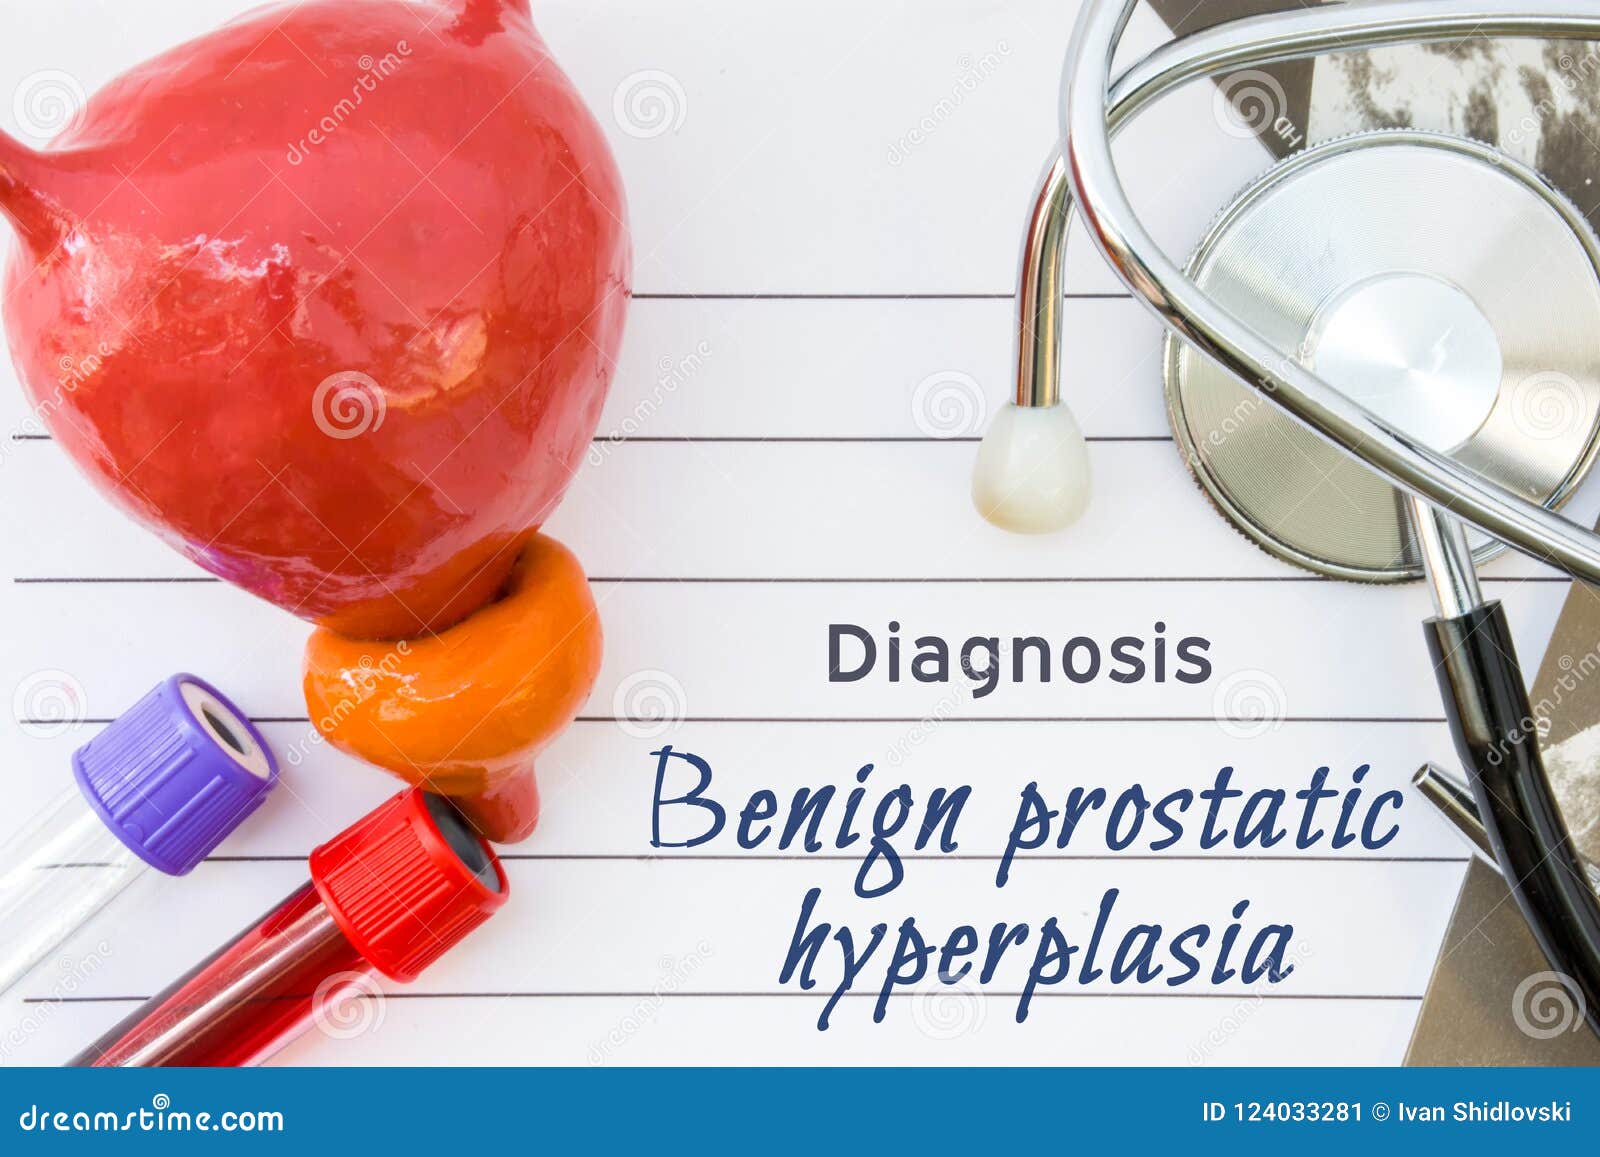 hiperplazia benigna de prostata diagnostic